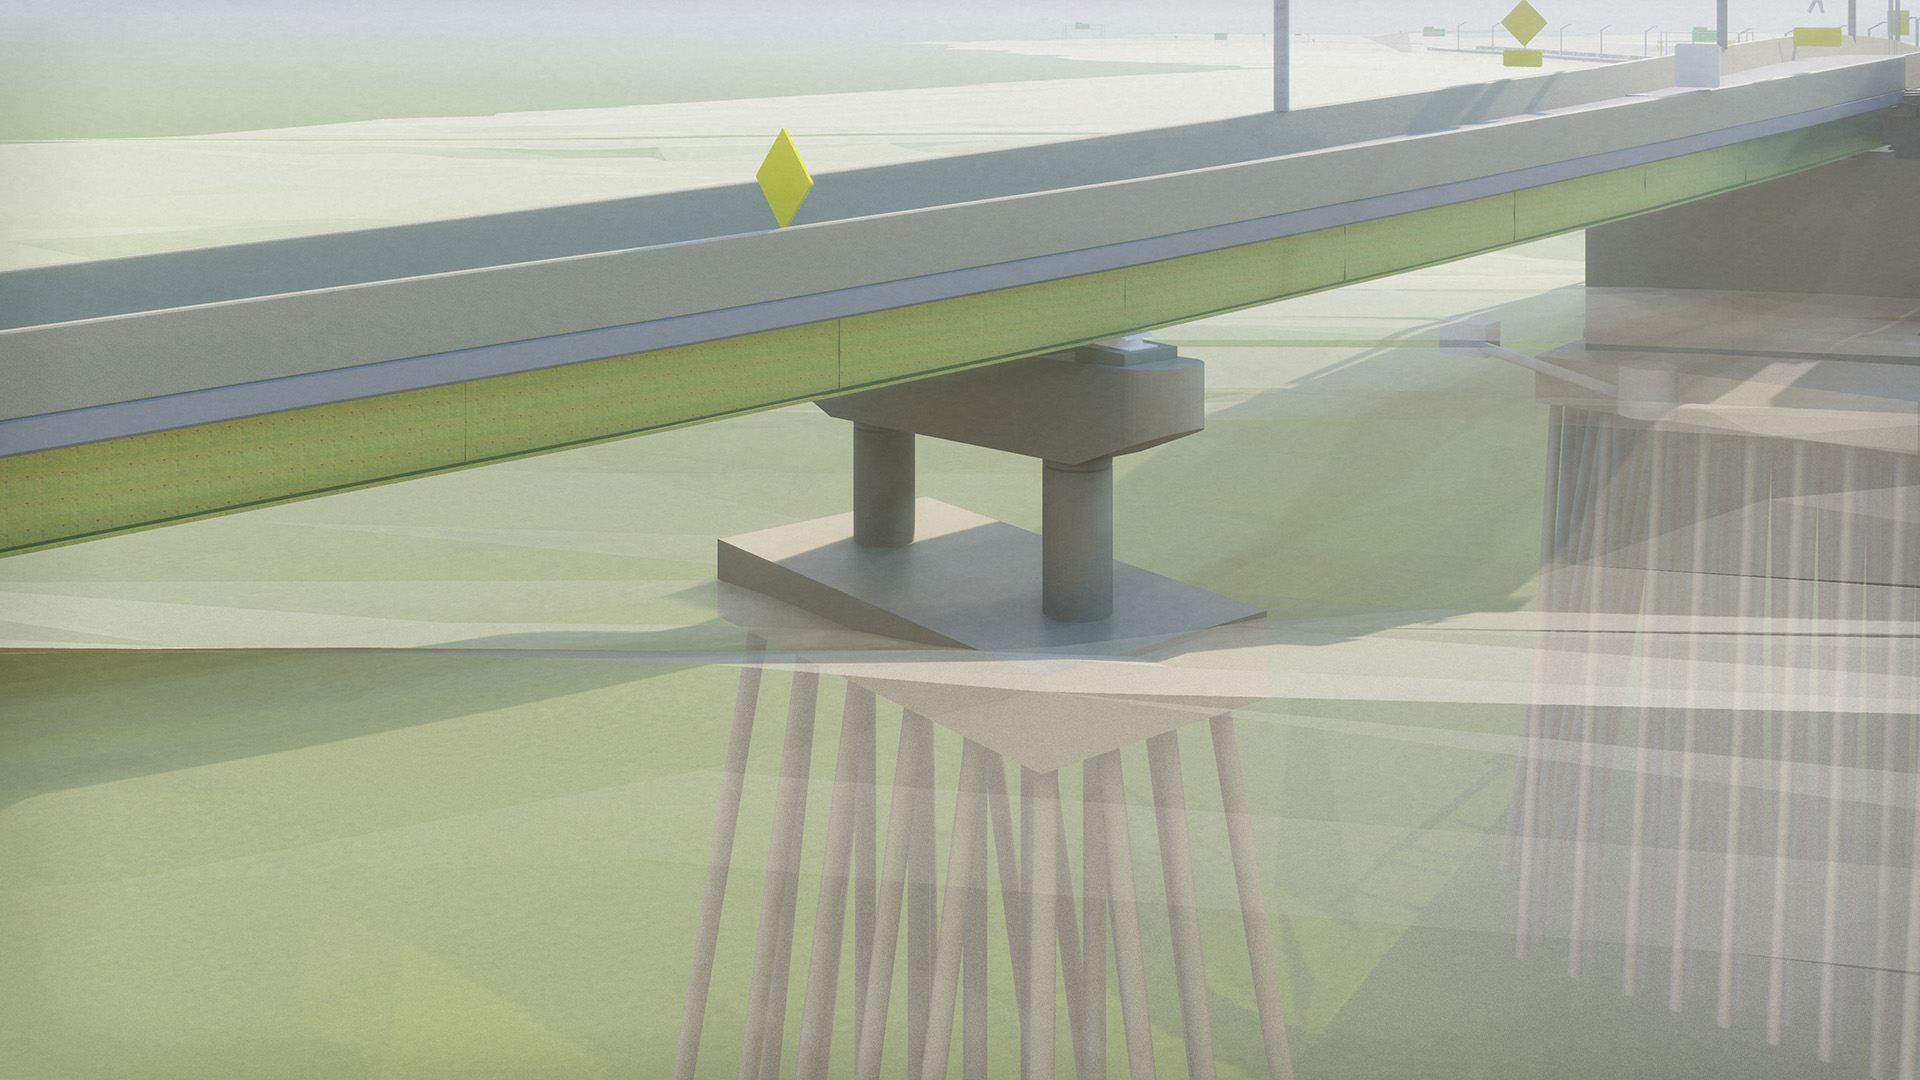 Digital as-built of a bridge showing underground pilings.